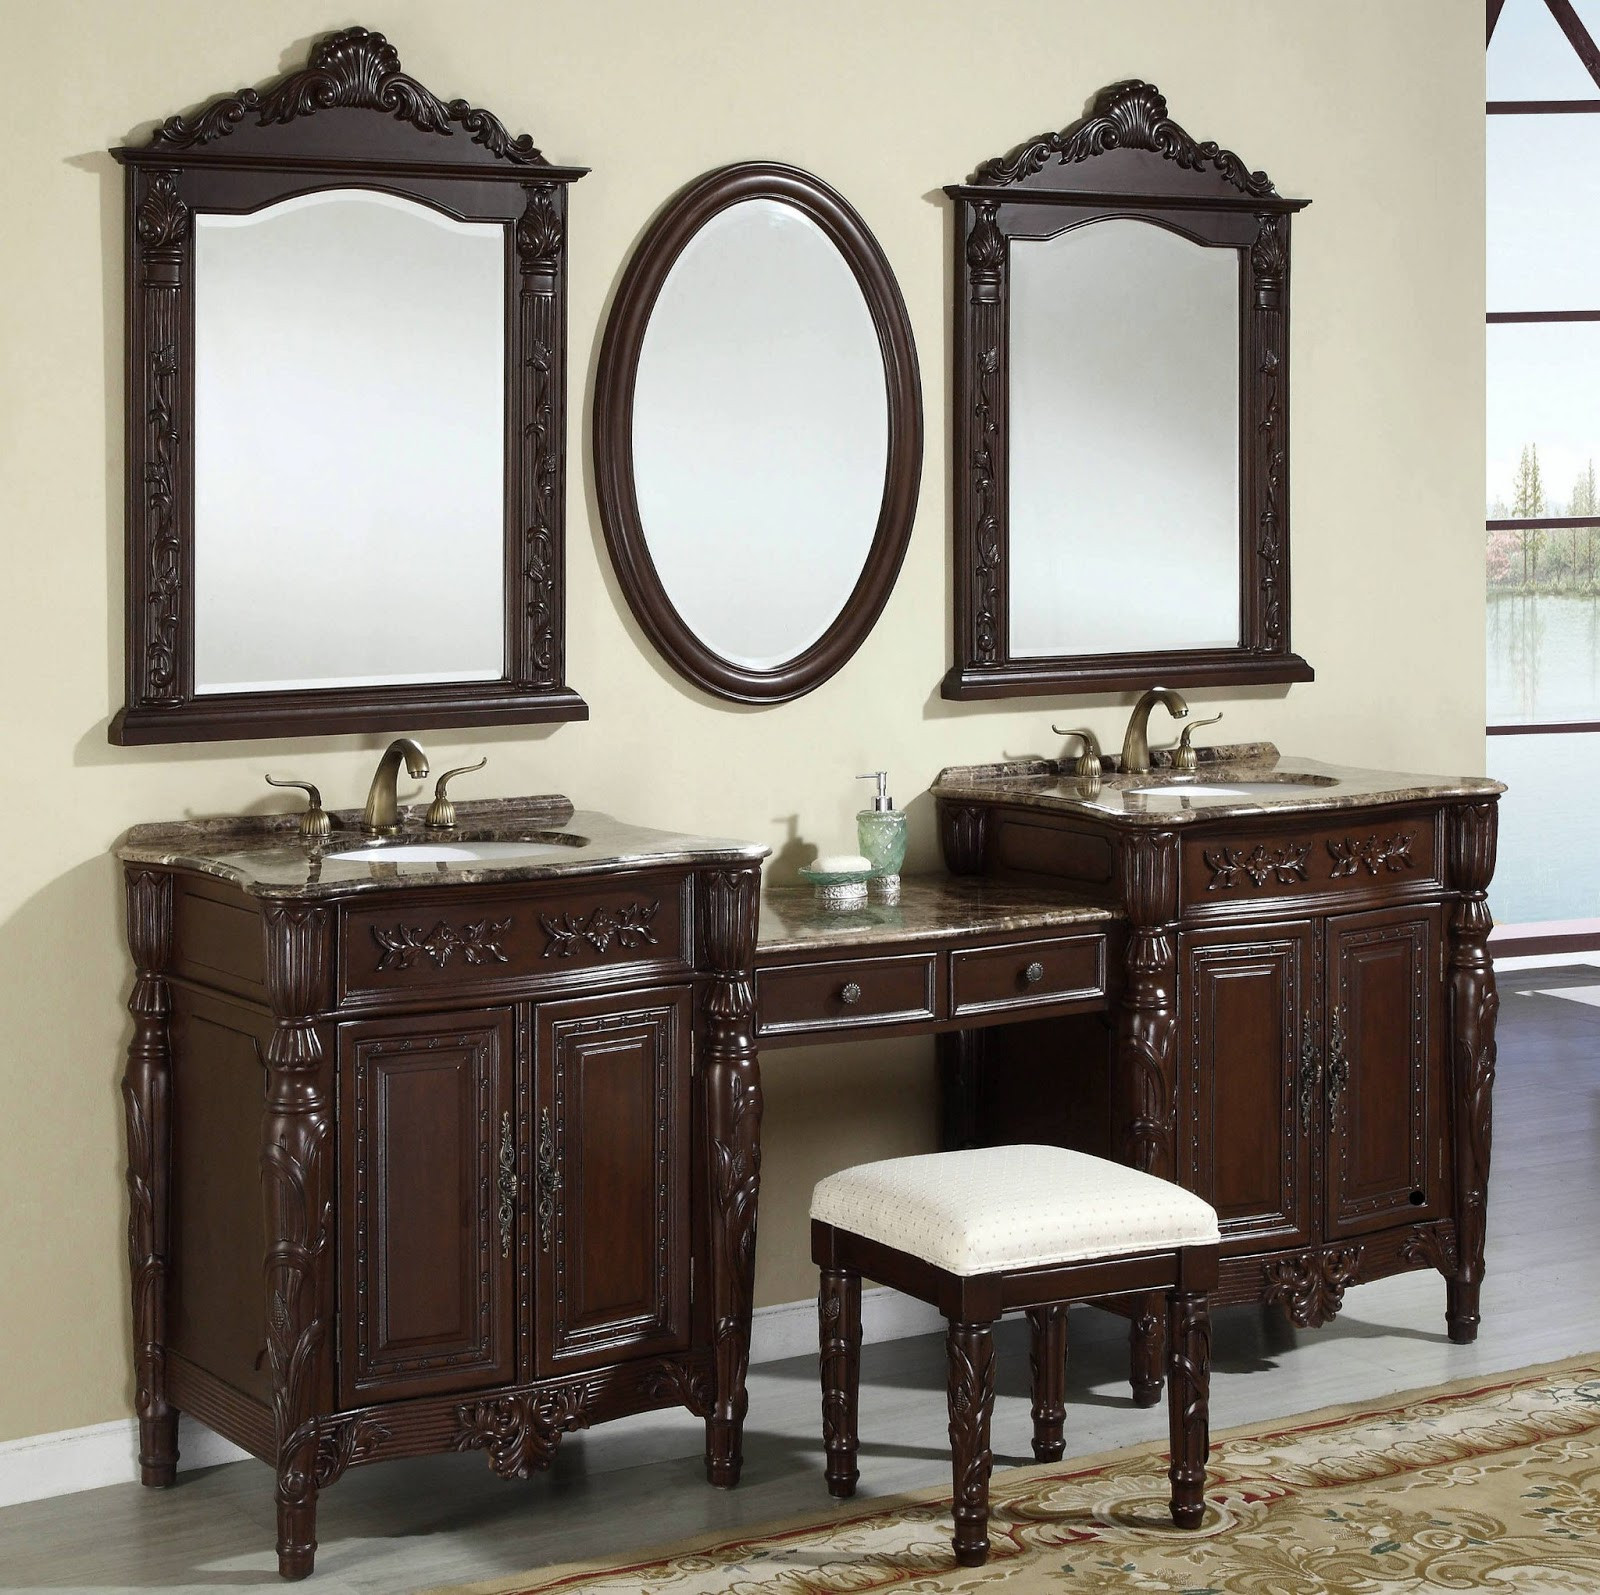 Bathroom Vanity And Mirror
 Bathroom Vanity Mirrors Models and Buying Tips Cabinets